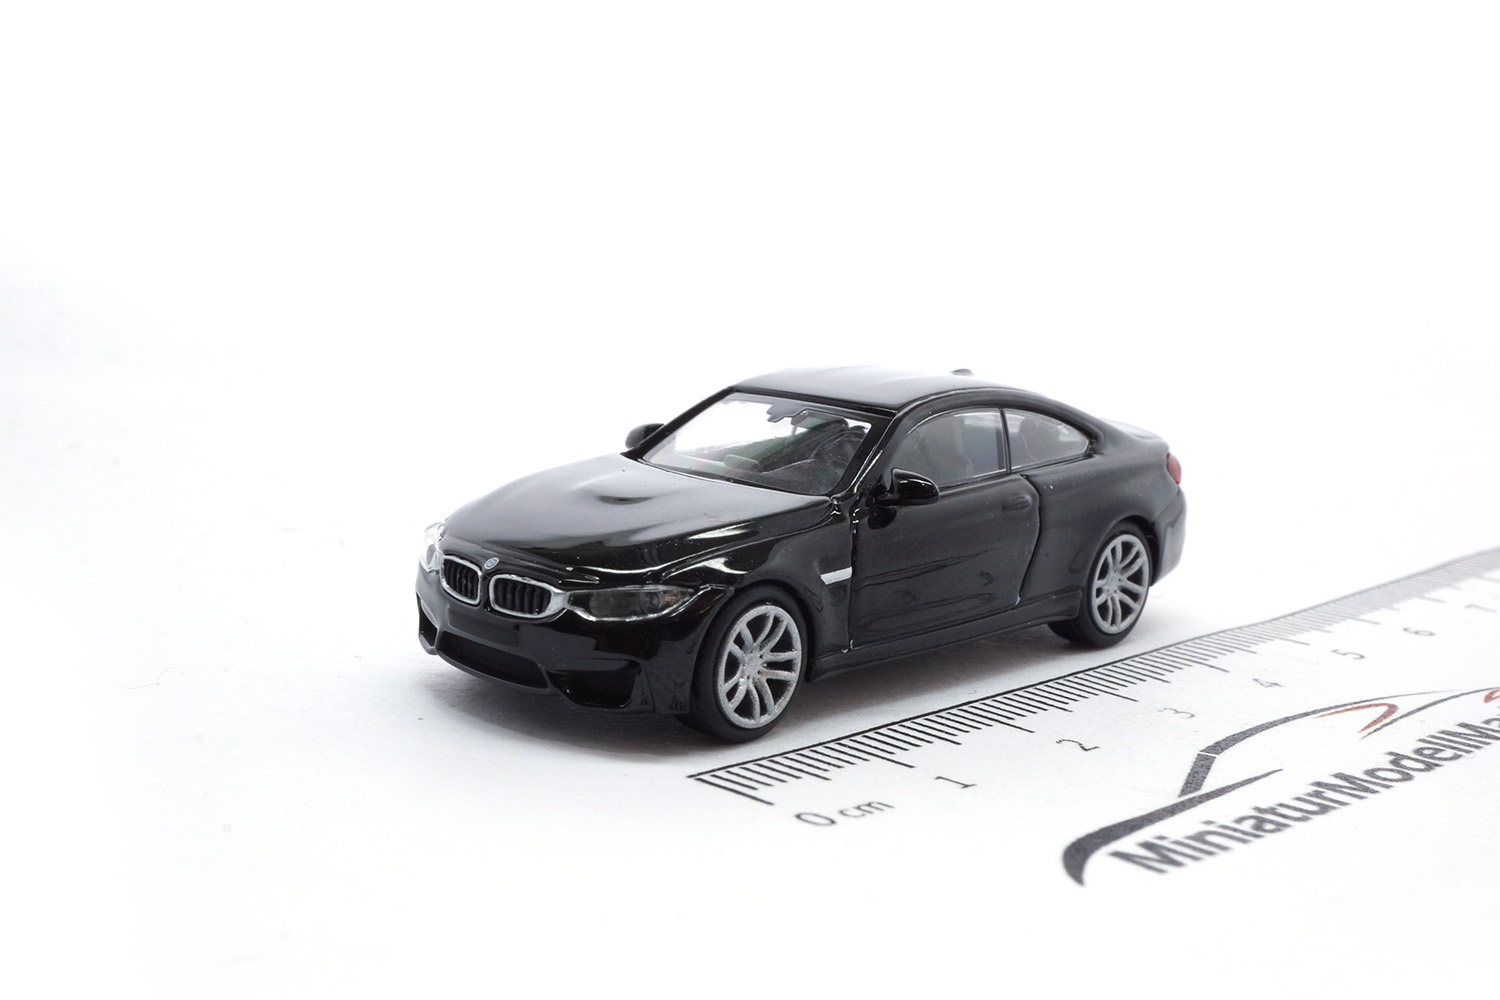 Minichamps 870027202 BMW M4 Coupe - Schwarz Metallic - 2015 1:87